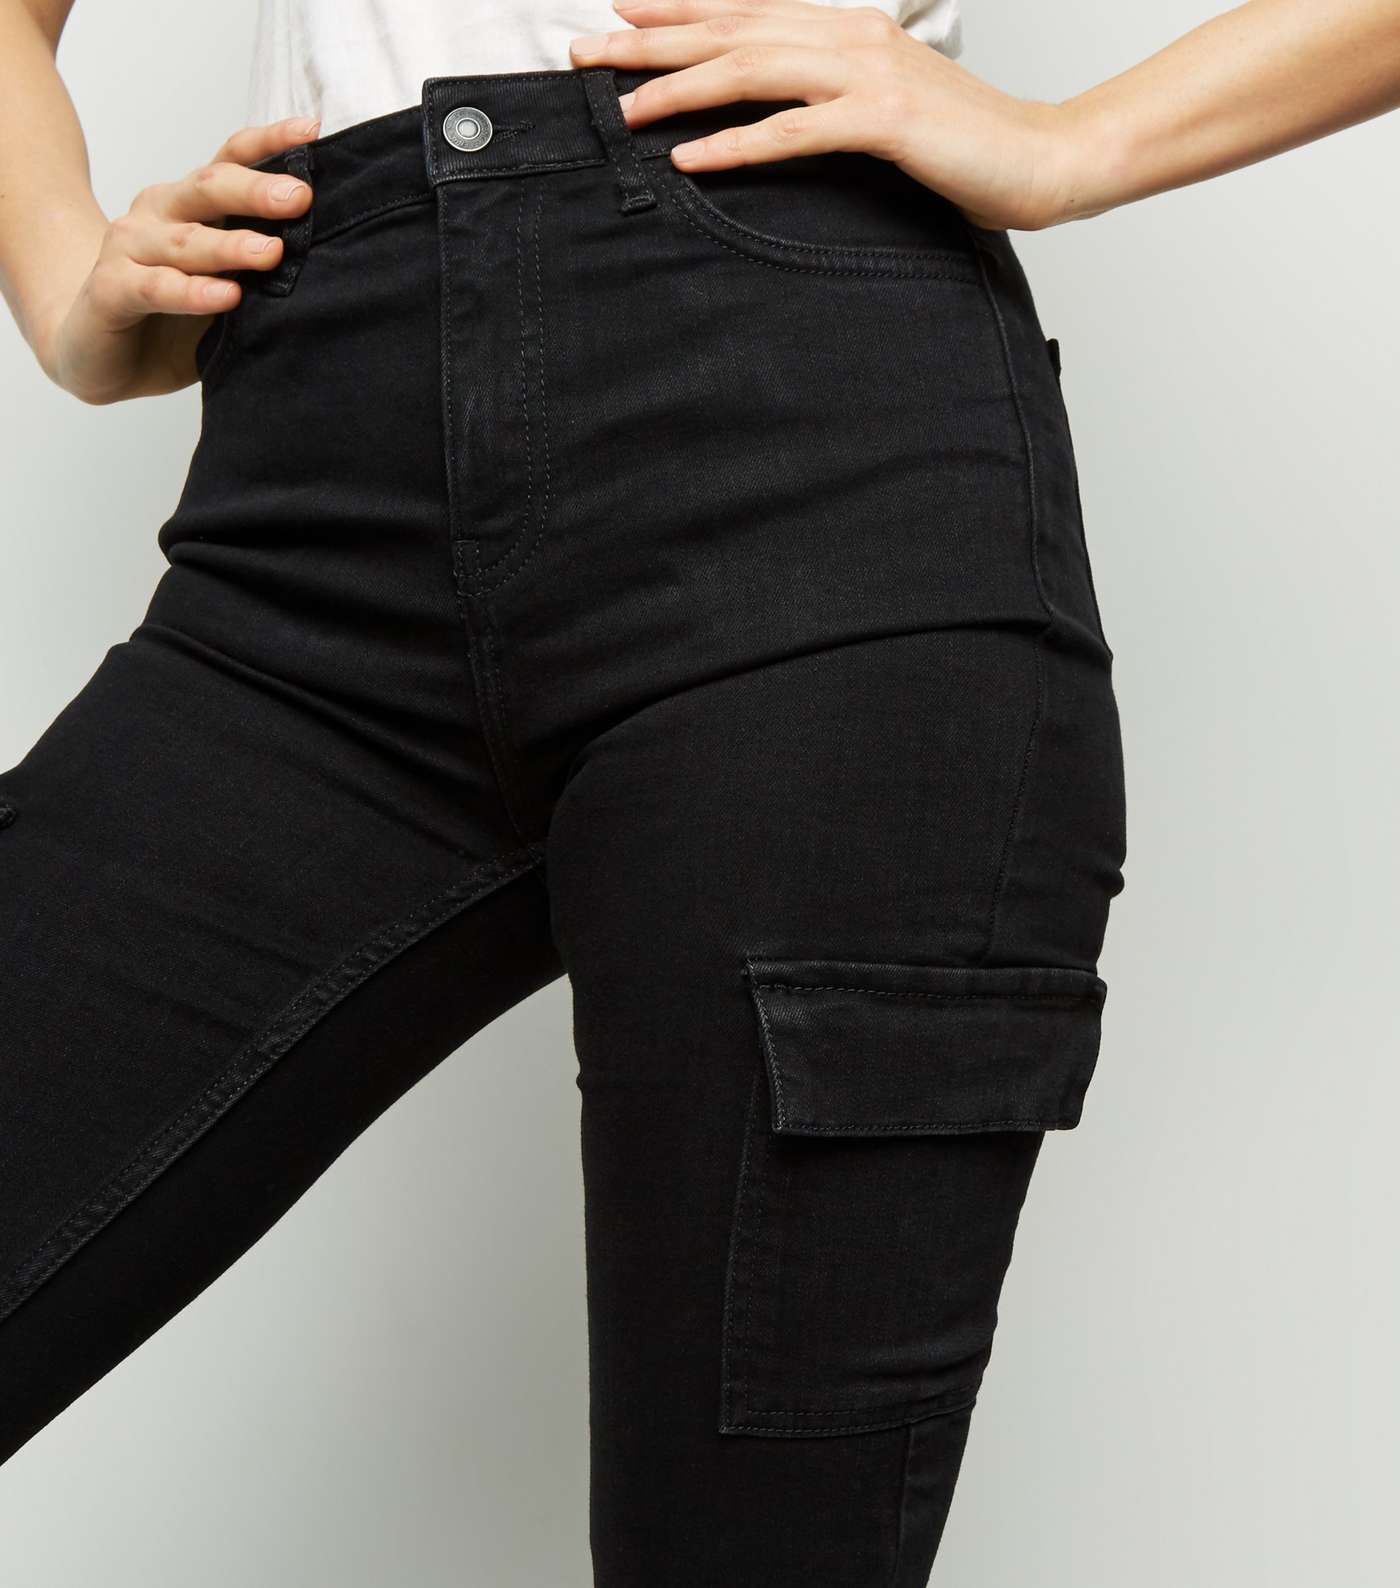 Black Utility Pocket Skinny Jenna Jeans Image 5